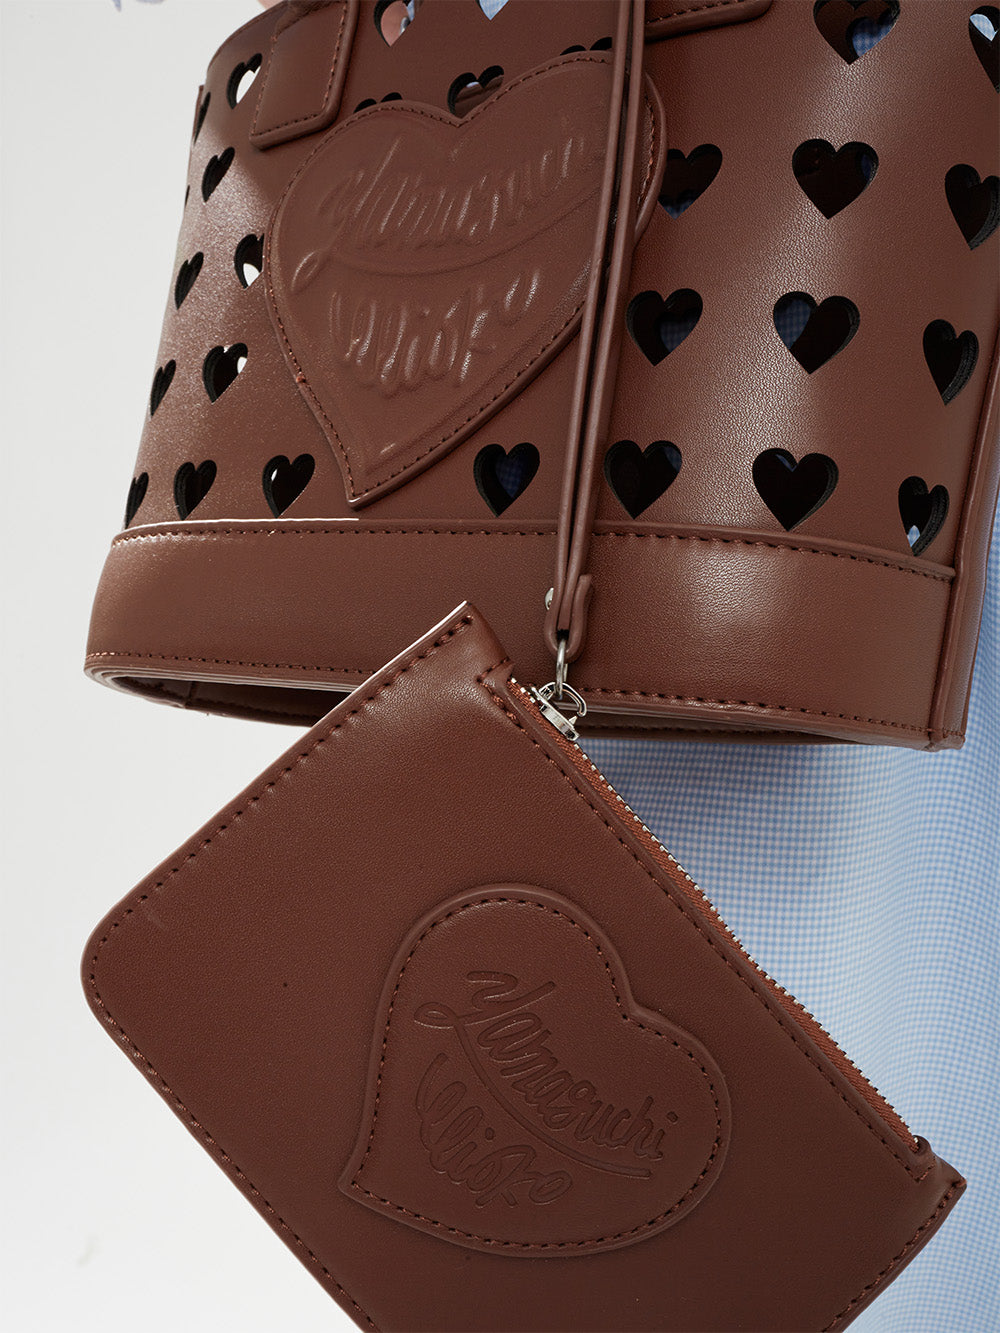 MUKTANK×Yamaguchi mioko "Chocolate"Loving Hollowed Out Bag Retro Sweet Handbag